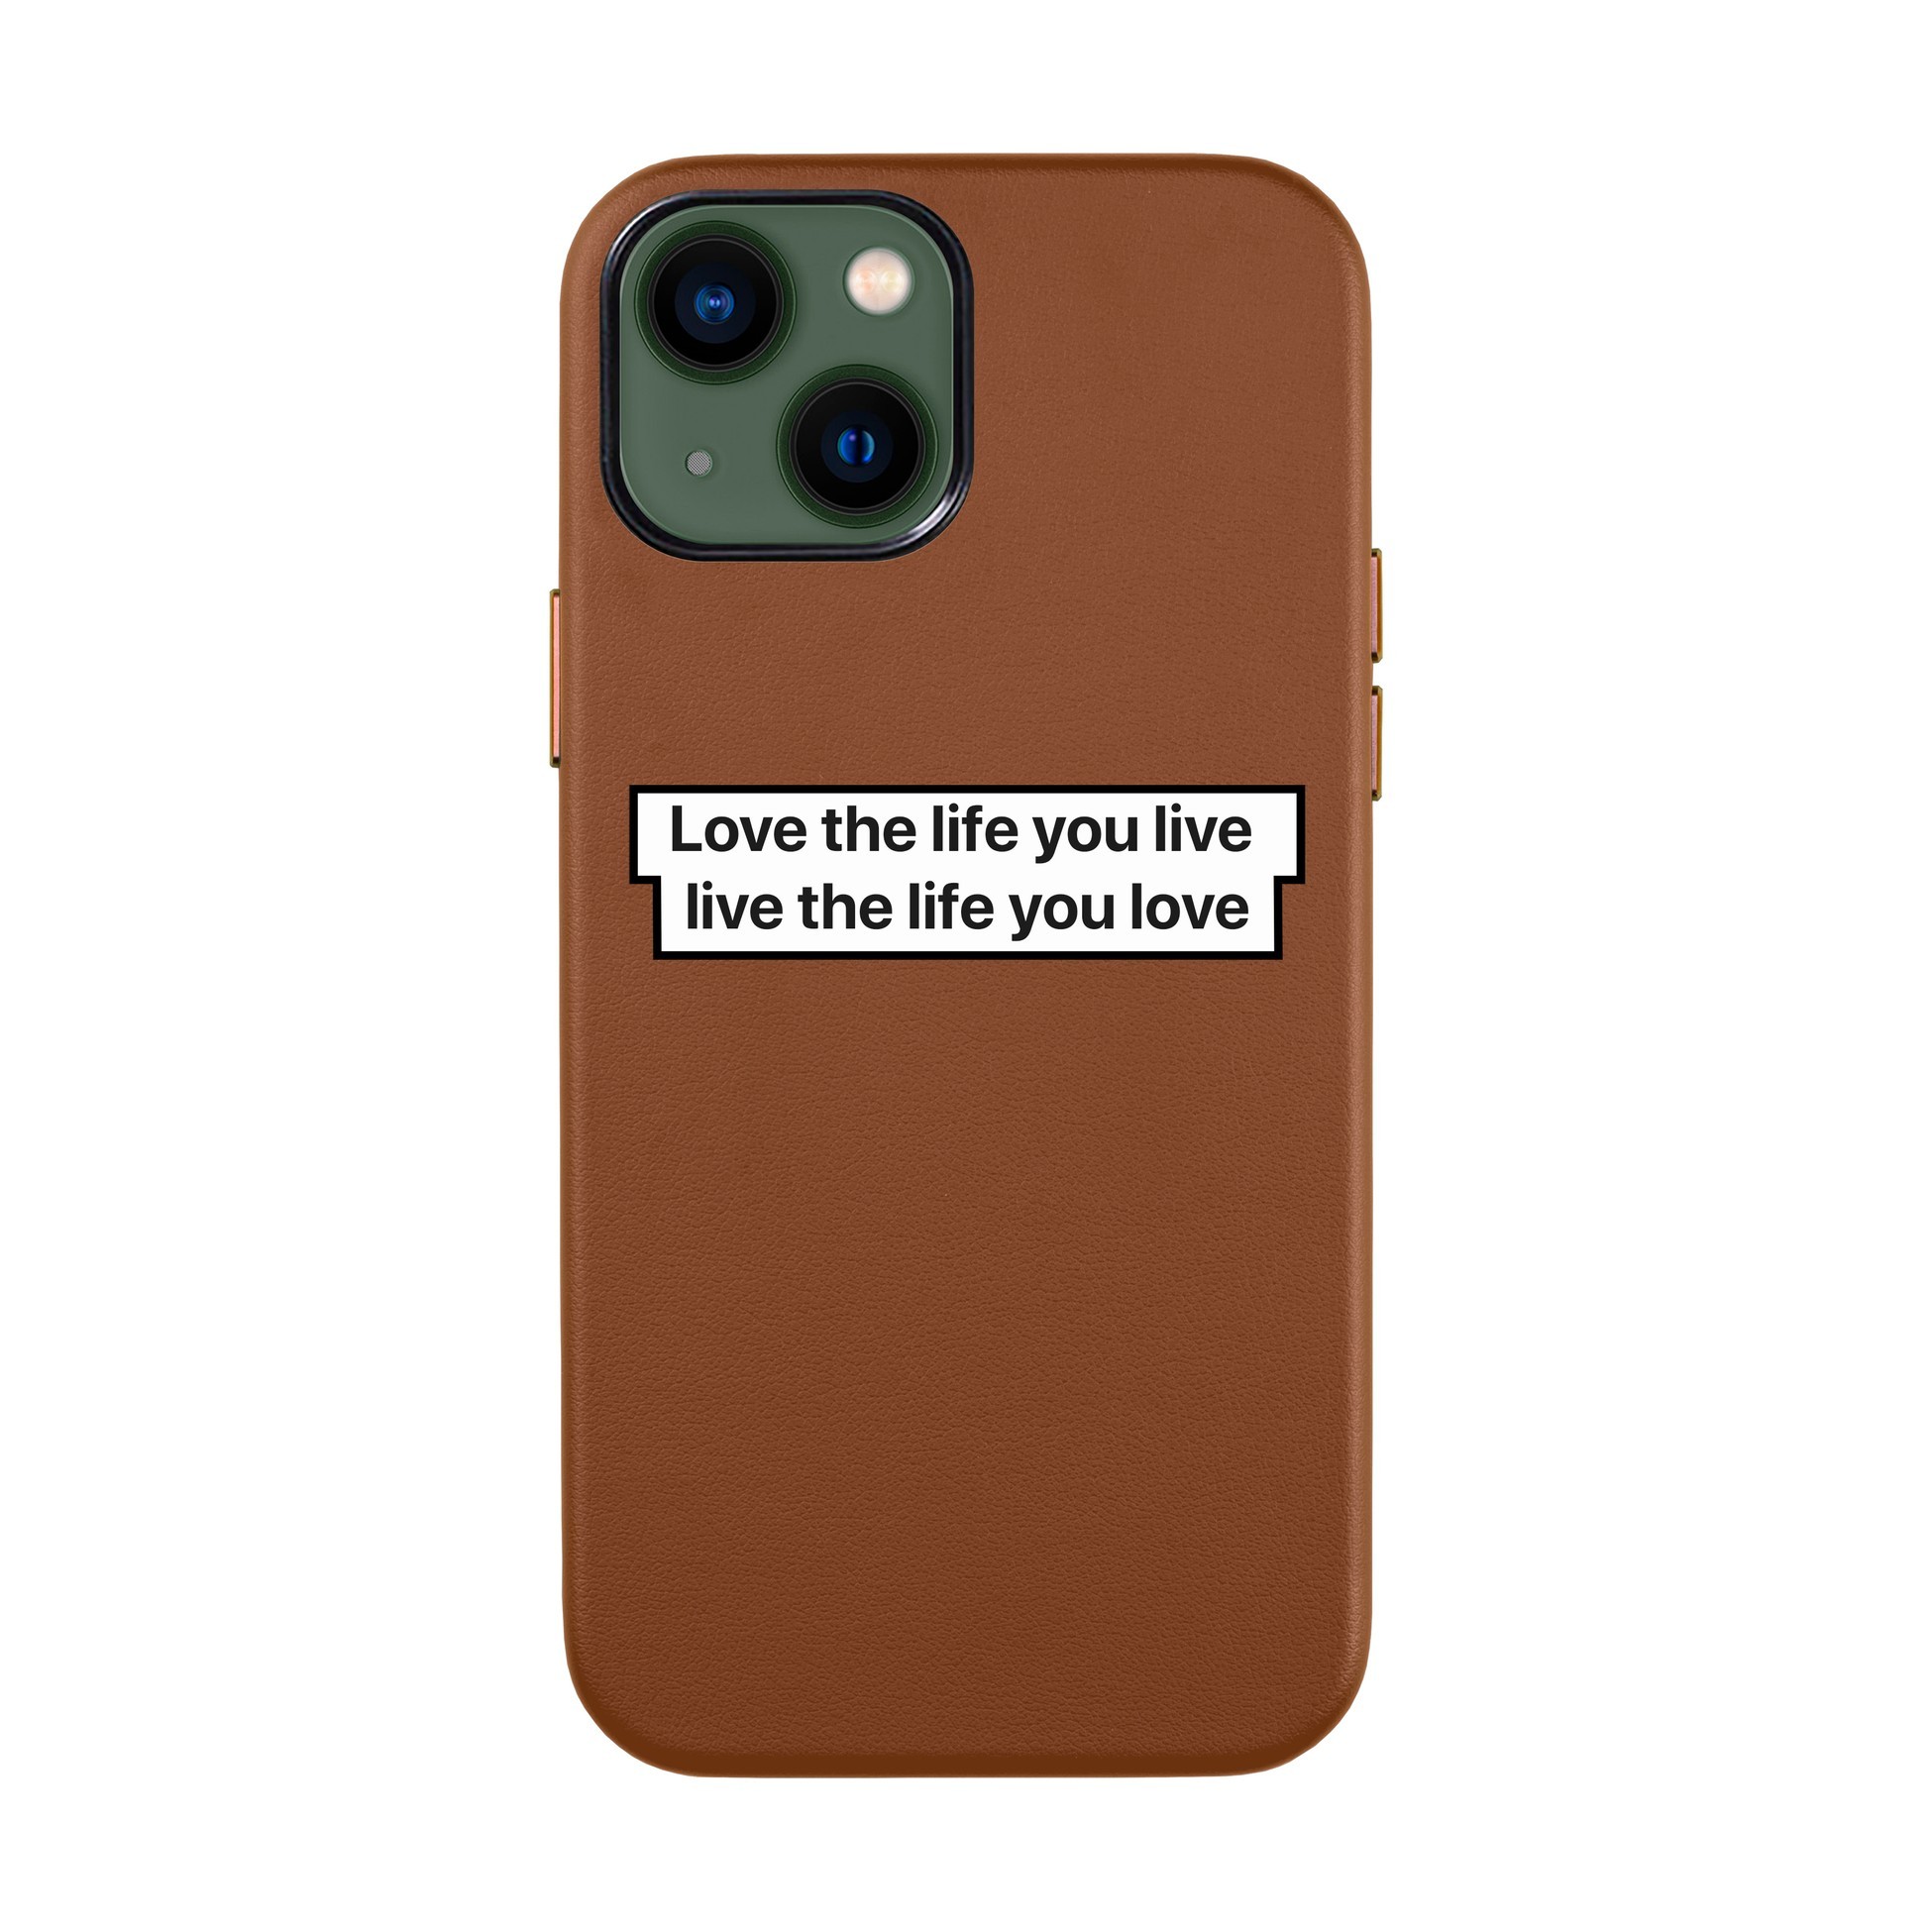 LOVE THE LIFE-iPhone Leather Kılıf